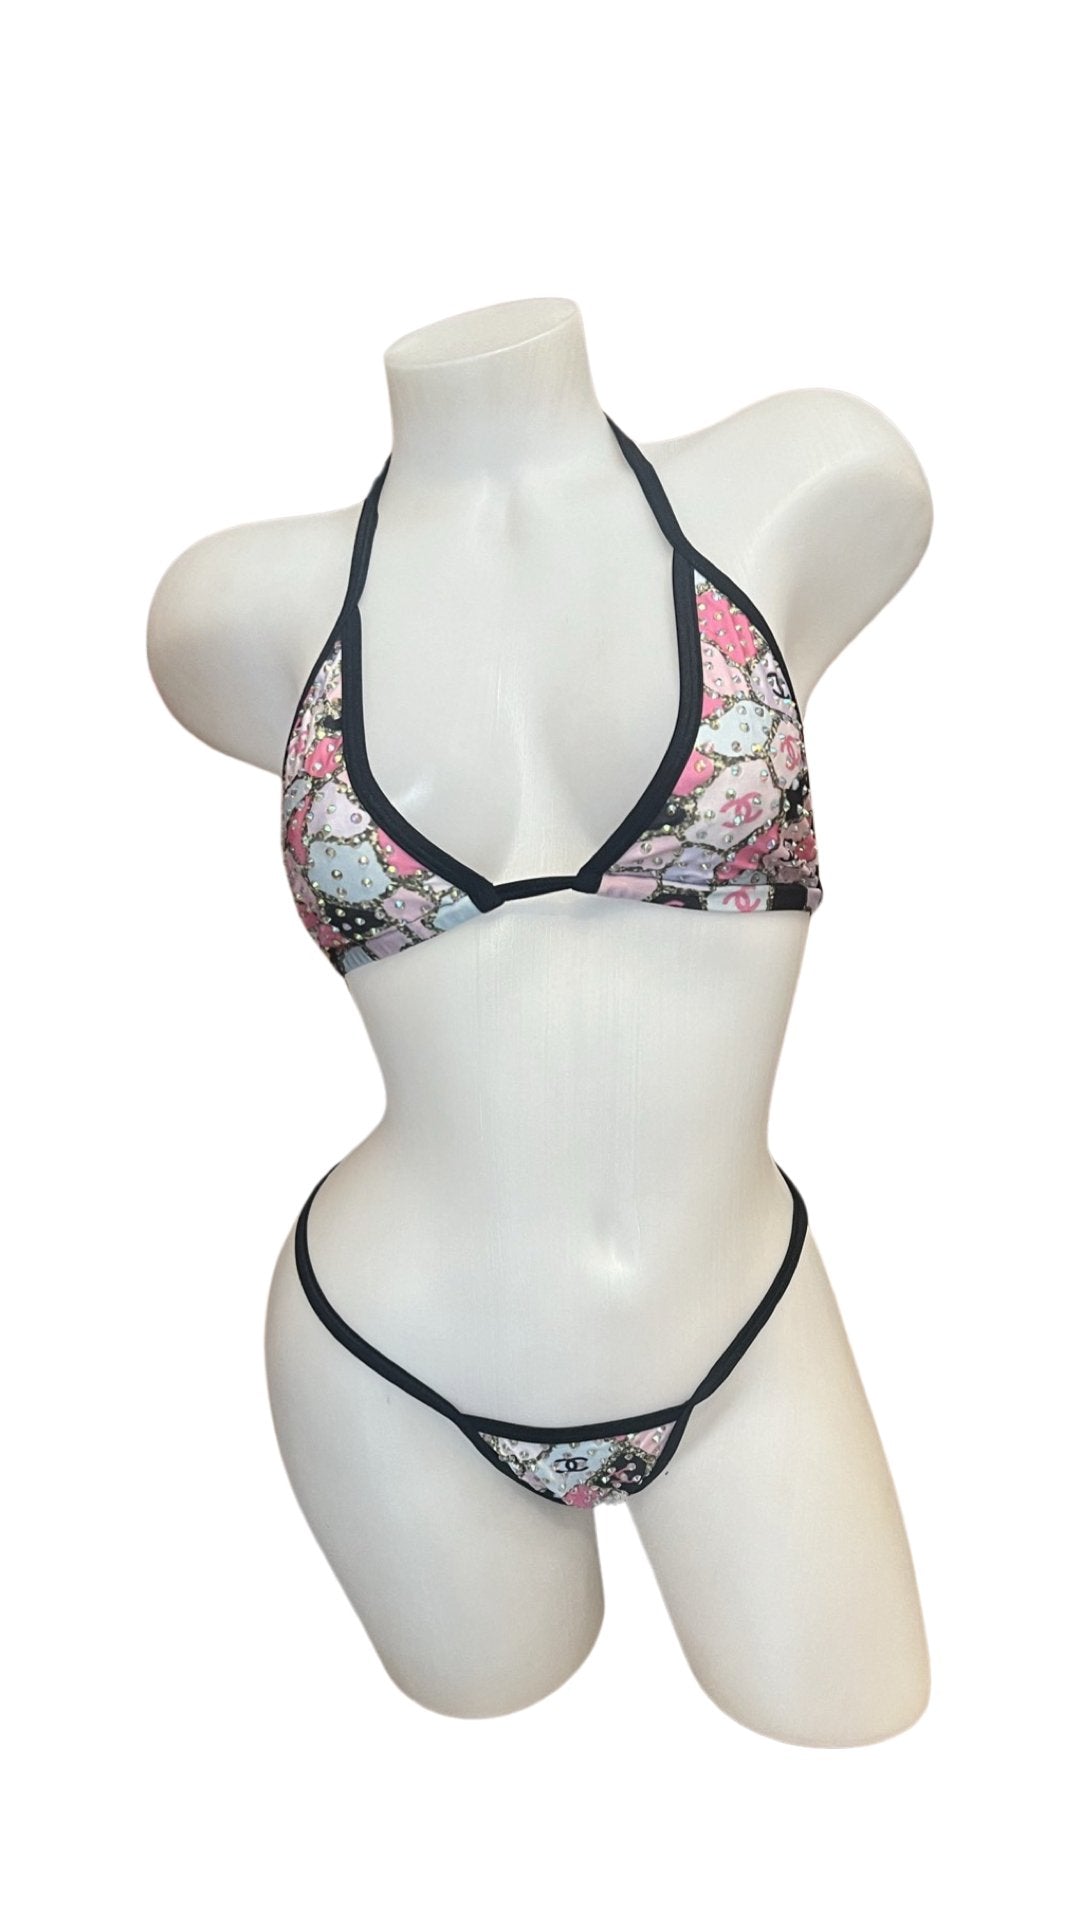 Rhinestone Bikini Design Pink/White - Model Express VancouverBikini